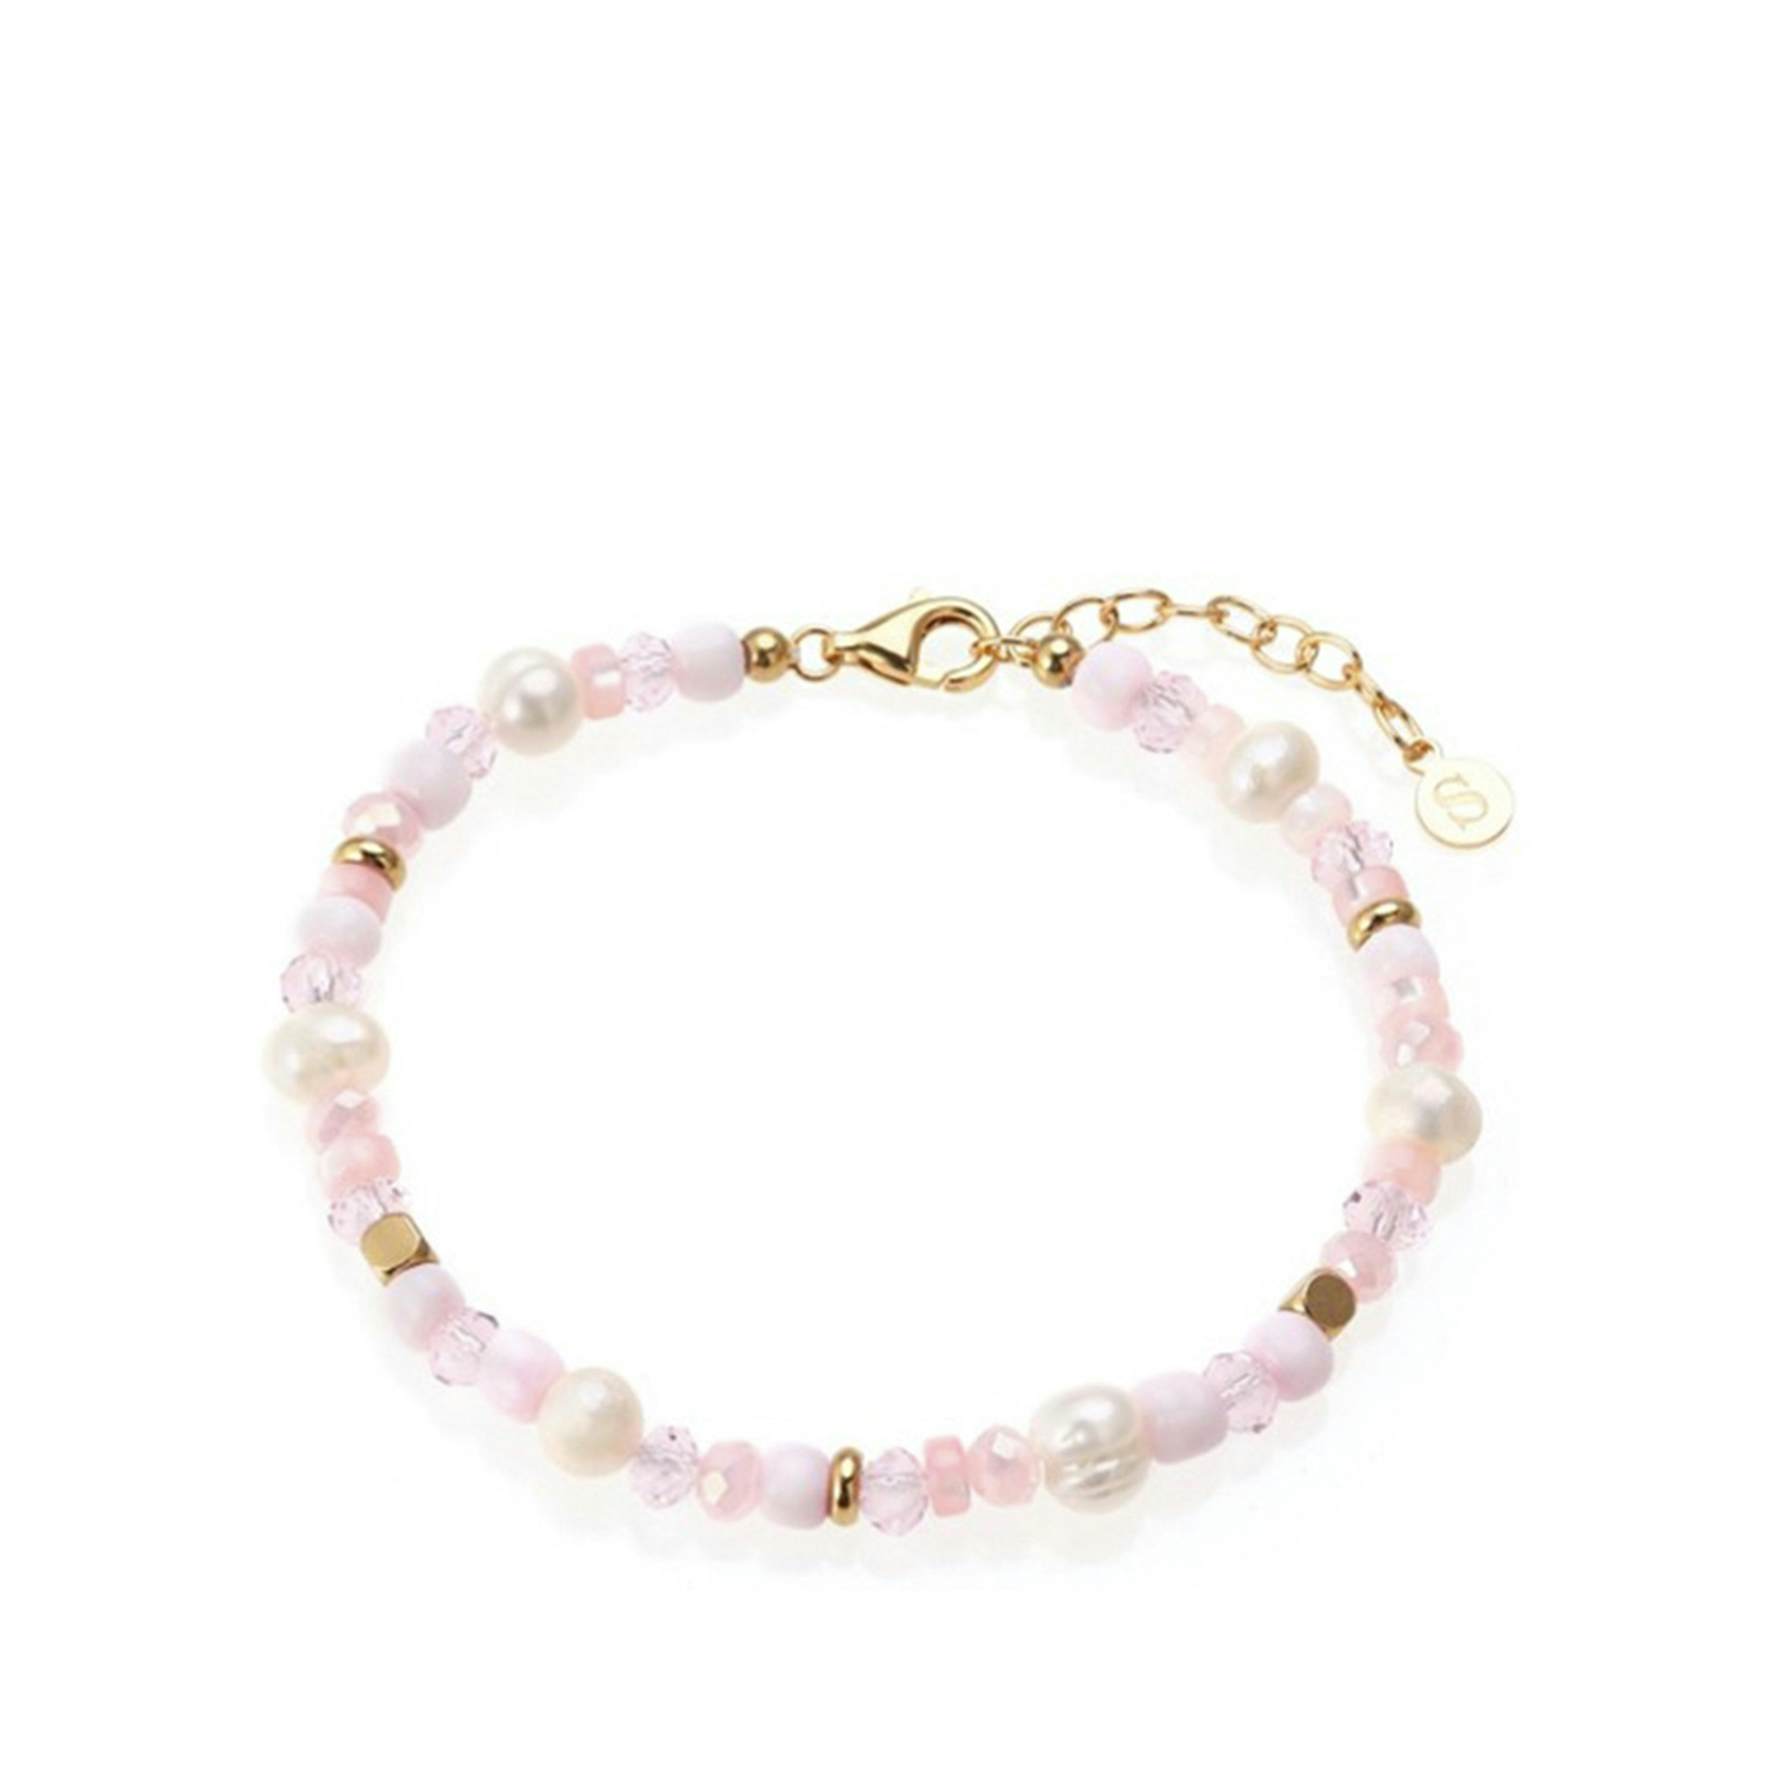 Kora Pearl Bracelet Light Pink fra Sistie i Forgyldt-Sølv Sterling 925